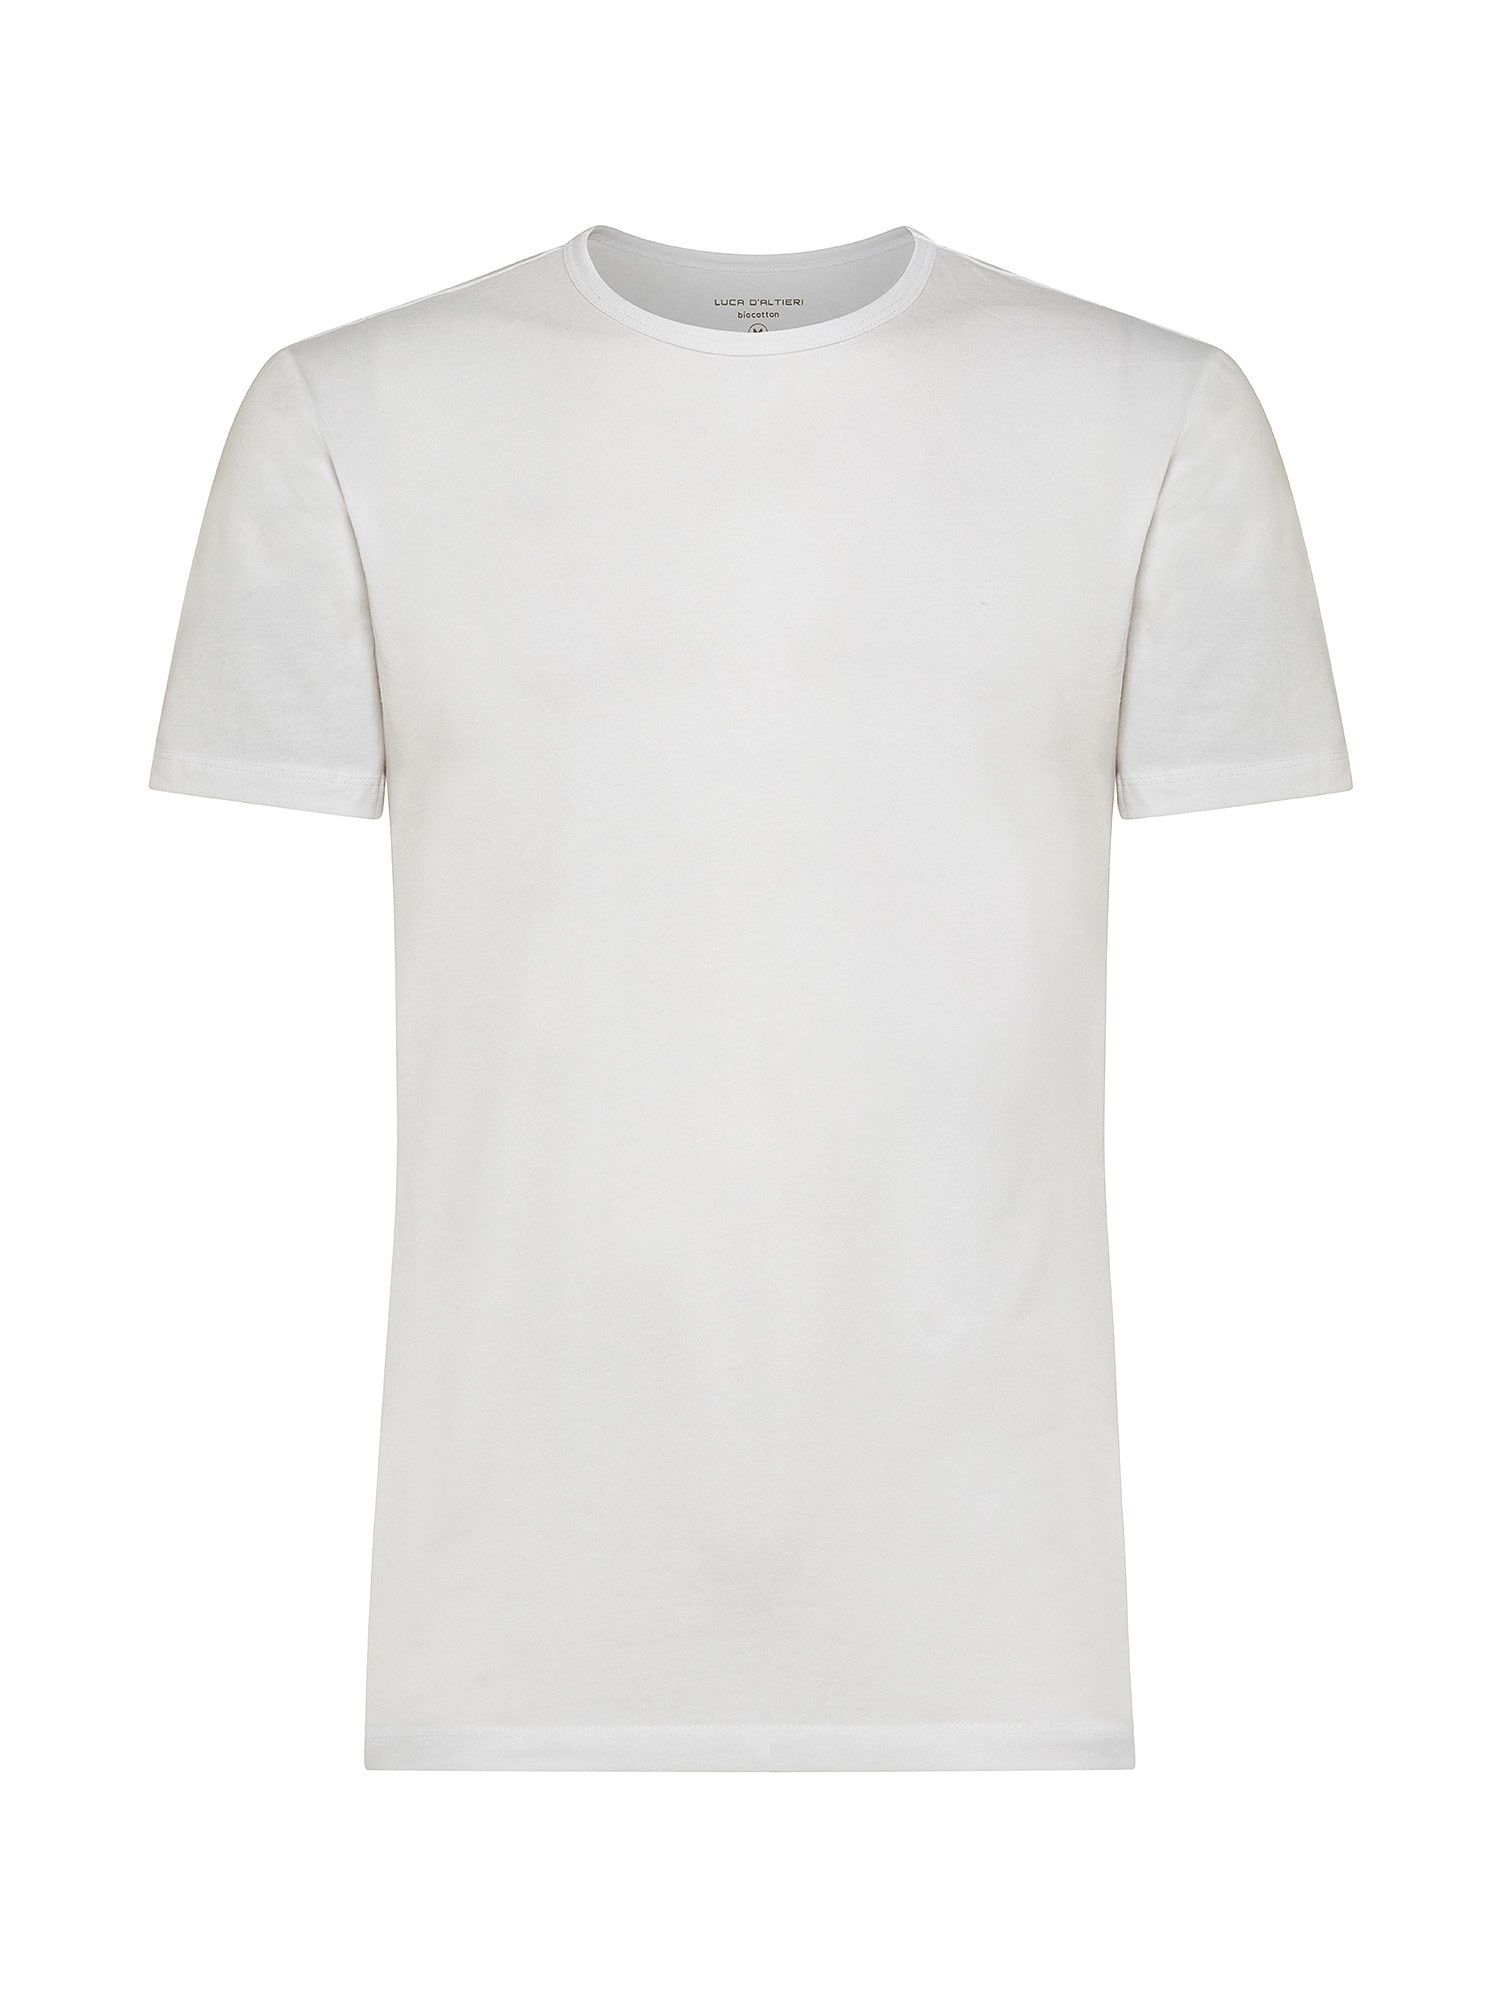 Luca D'Altieri - Set 2 t-shirt, Bianco, large image number 0